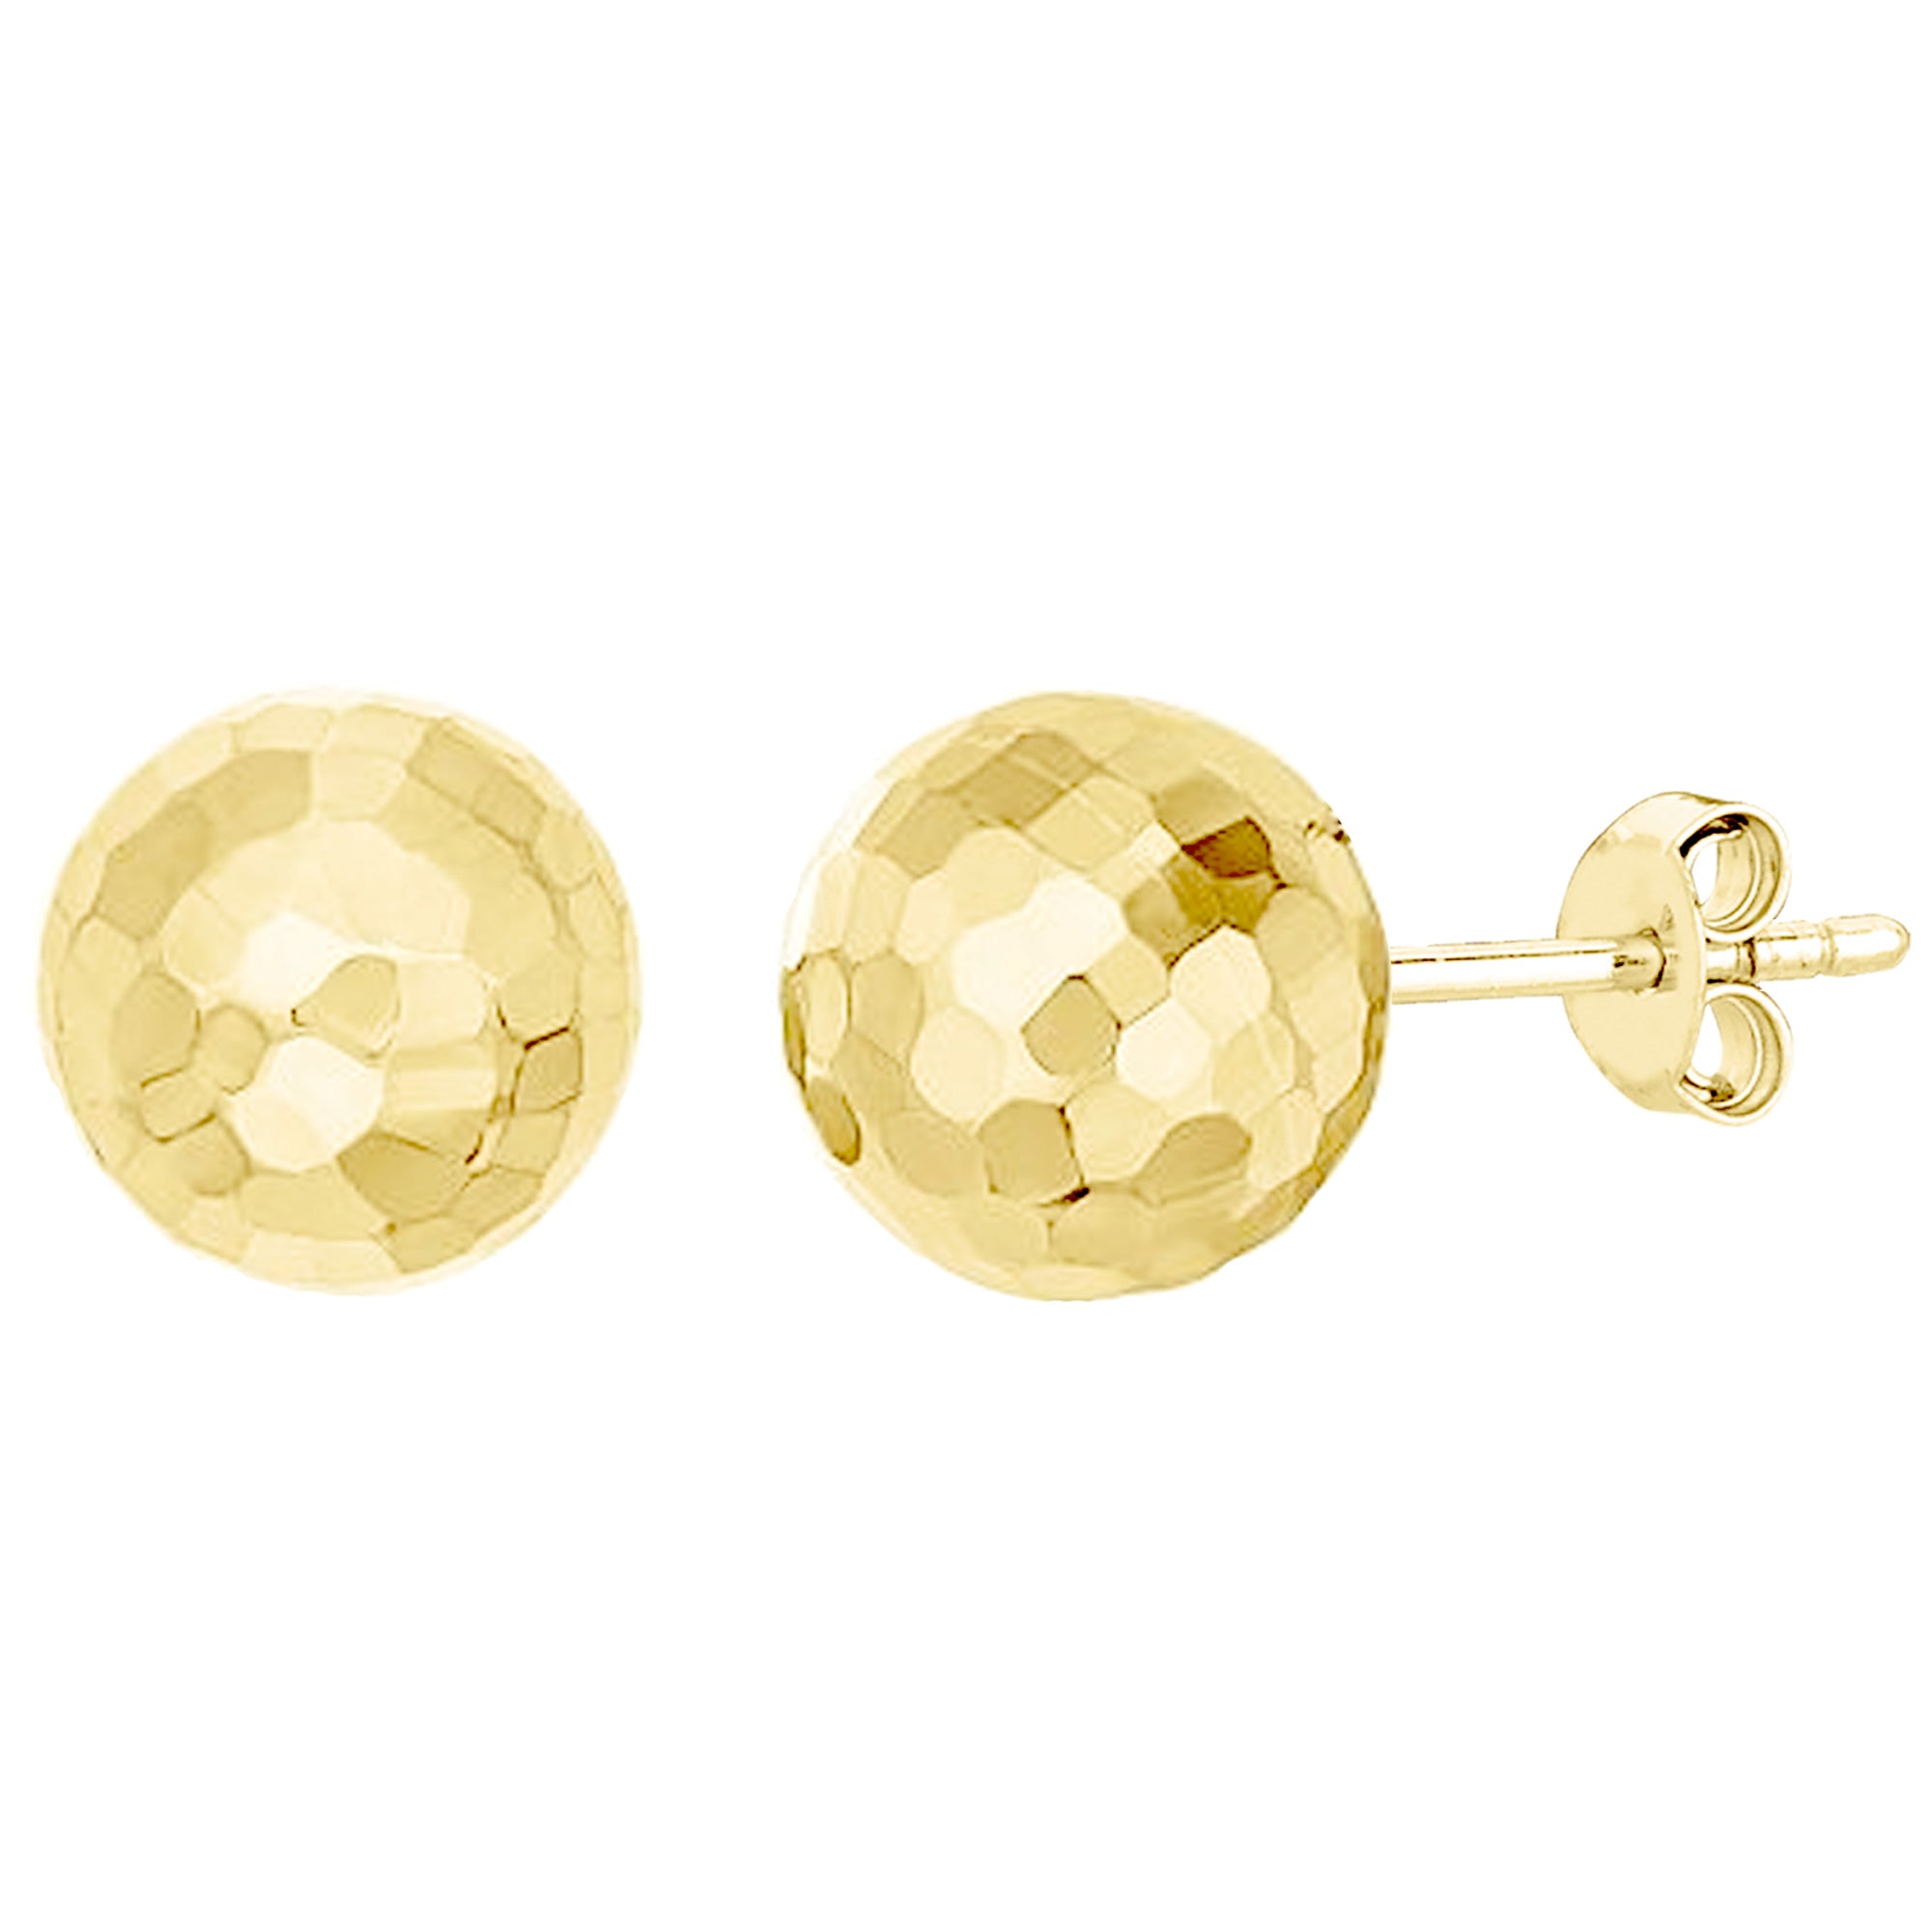 14k Gold Hammered Finish Ball Stud Earrings, 7mm – JewelryAffairs